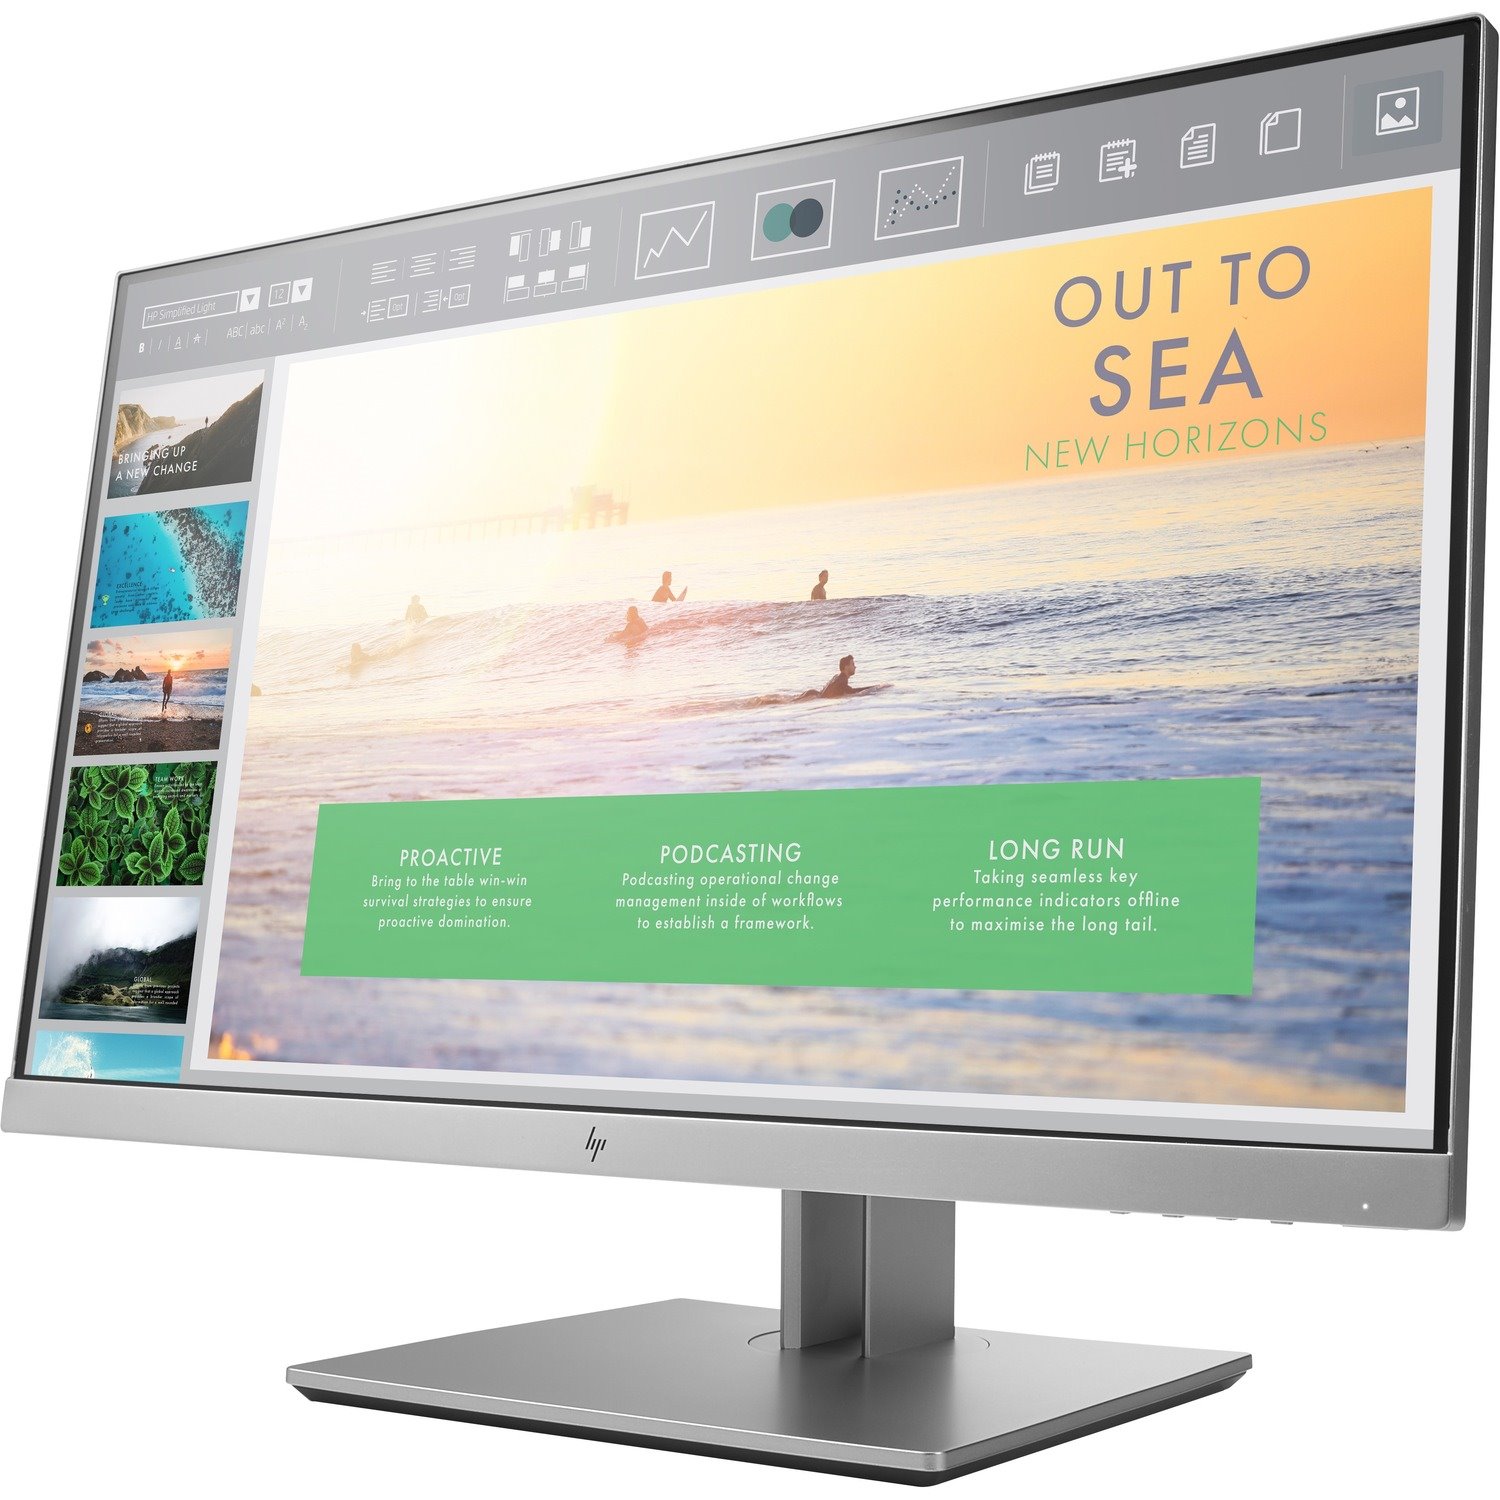 HP E233 23" Class Full HD LCD Monitor - 16:9 - Black, Silver